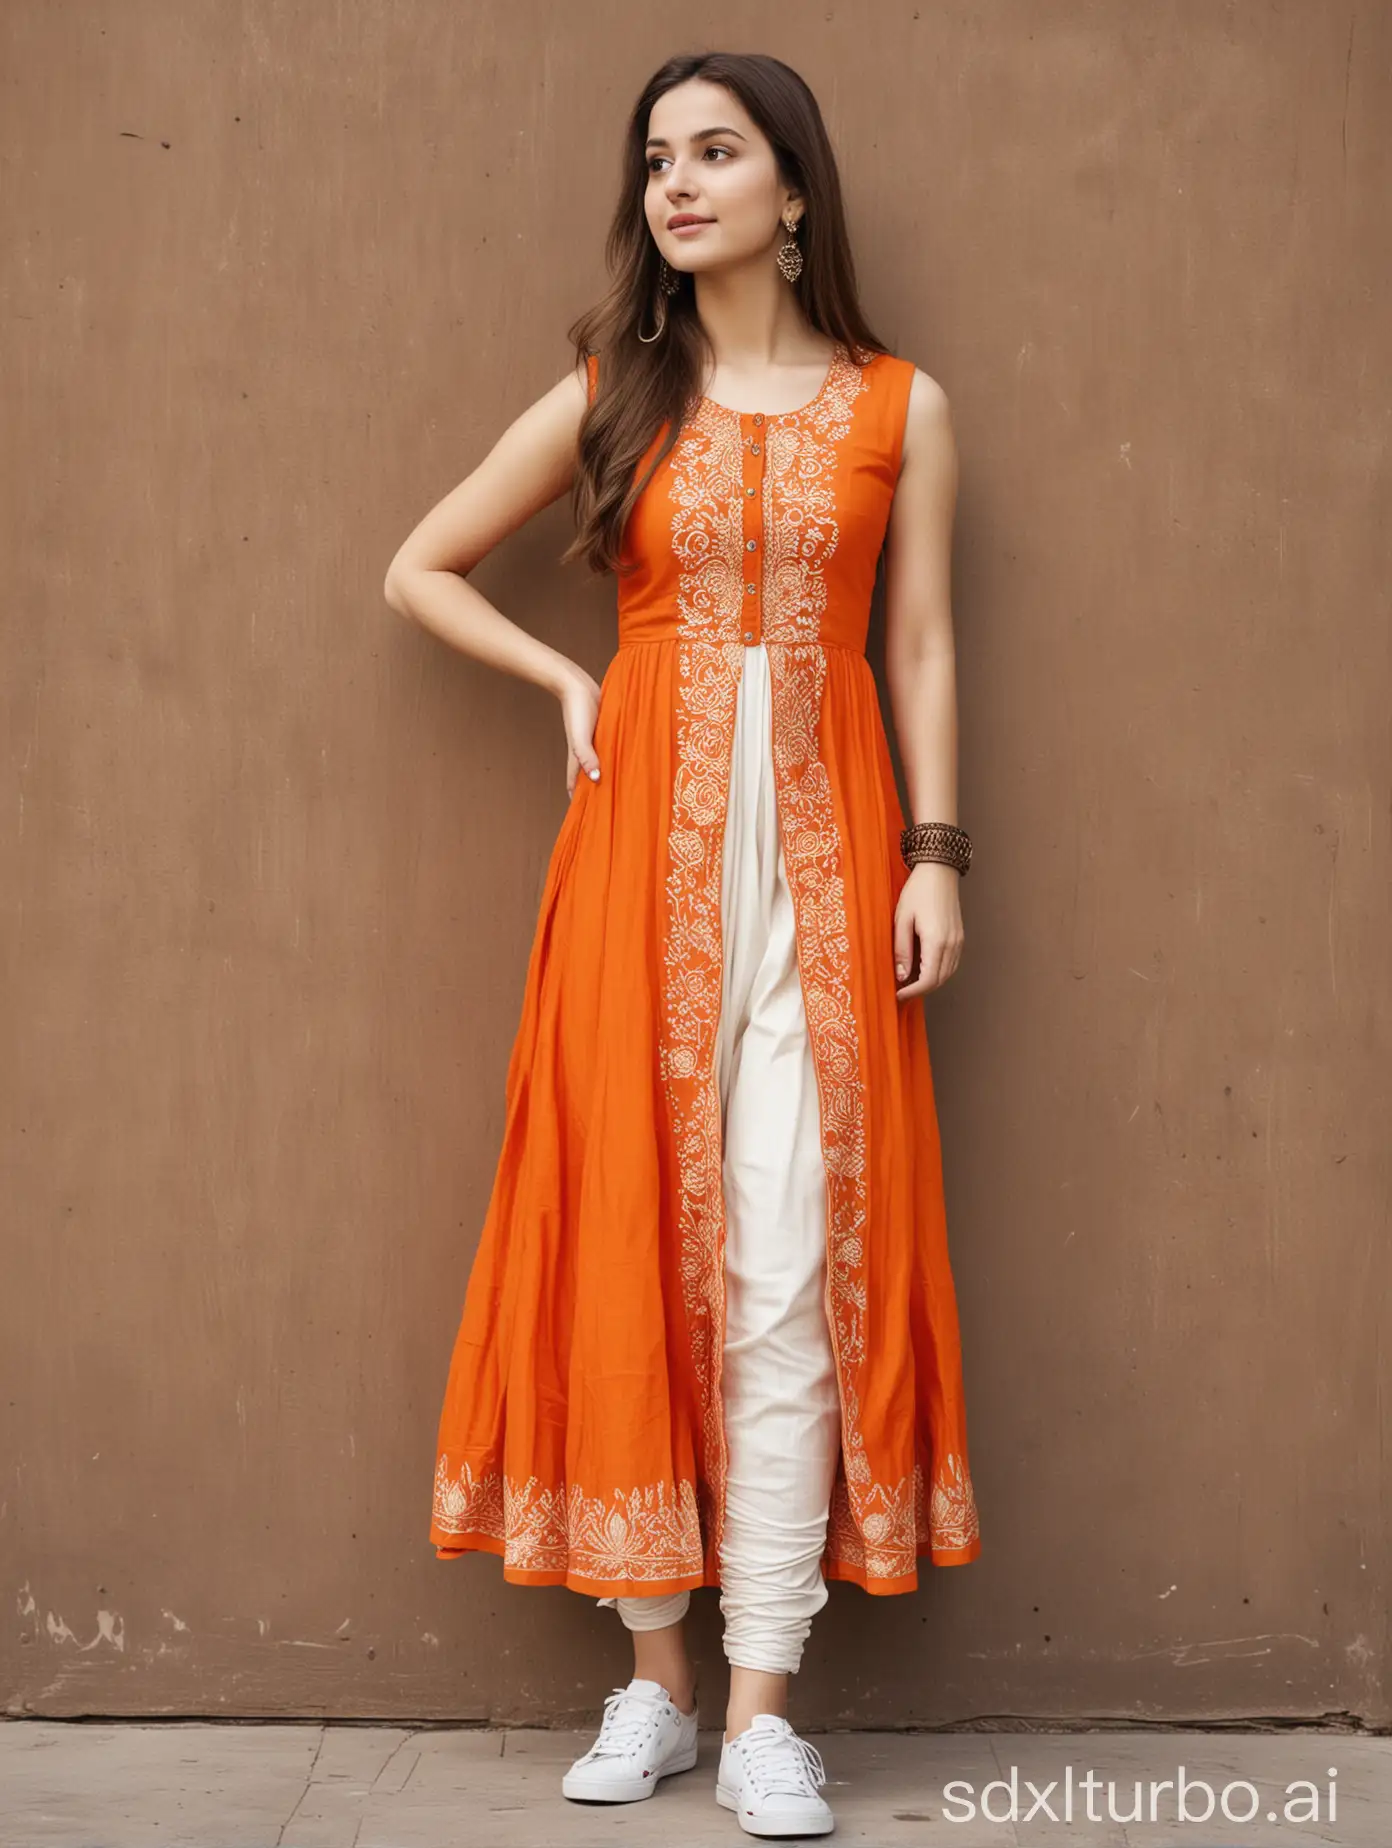 young Caucasian woman, long brown hair, slim body, wearing orange sleeveless Indian Anarkali, wearing white sneakers, full body